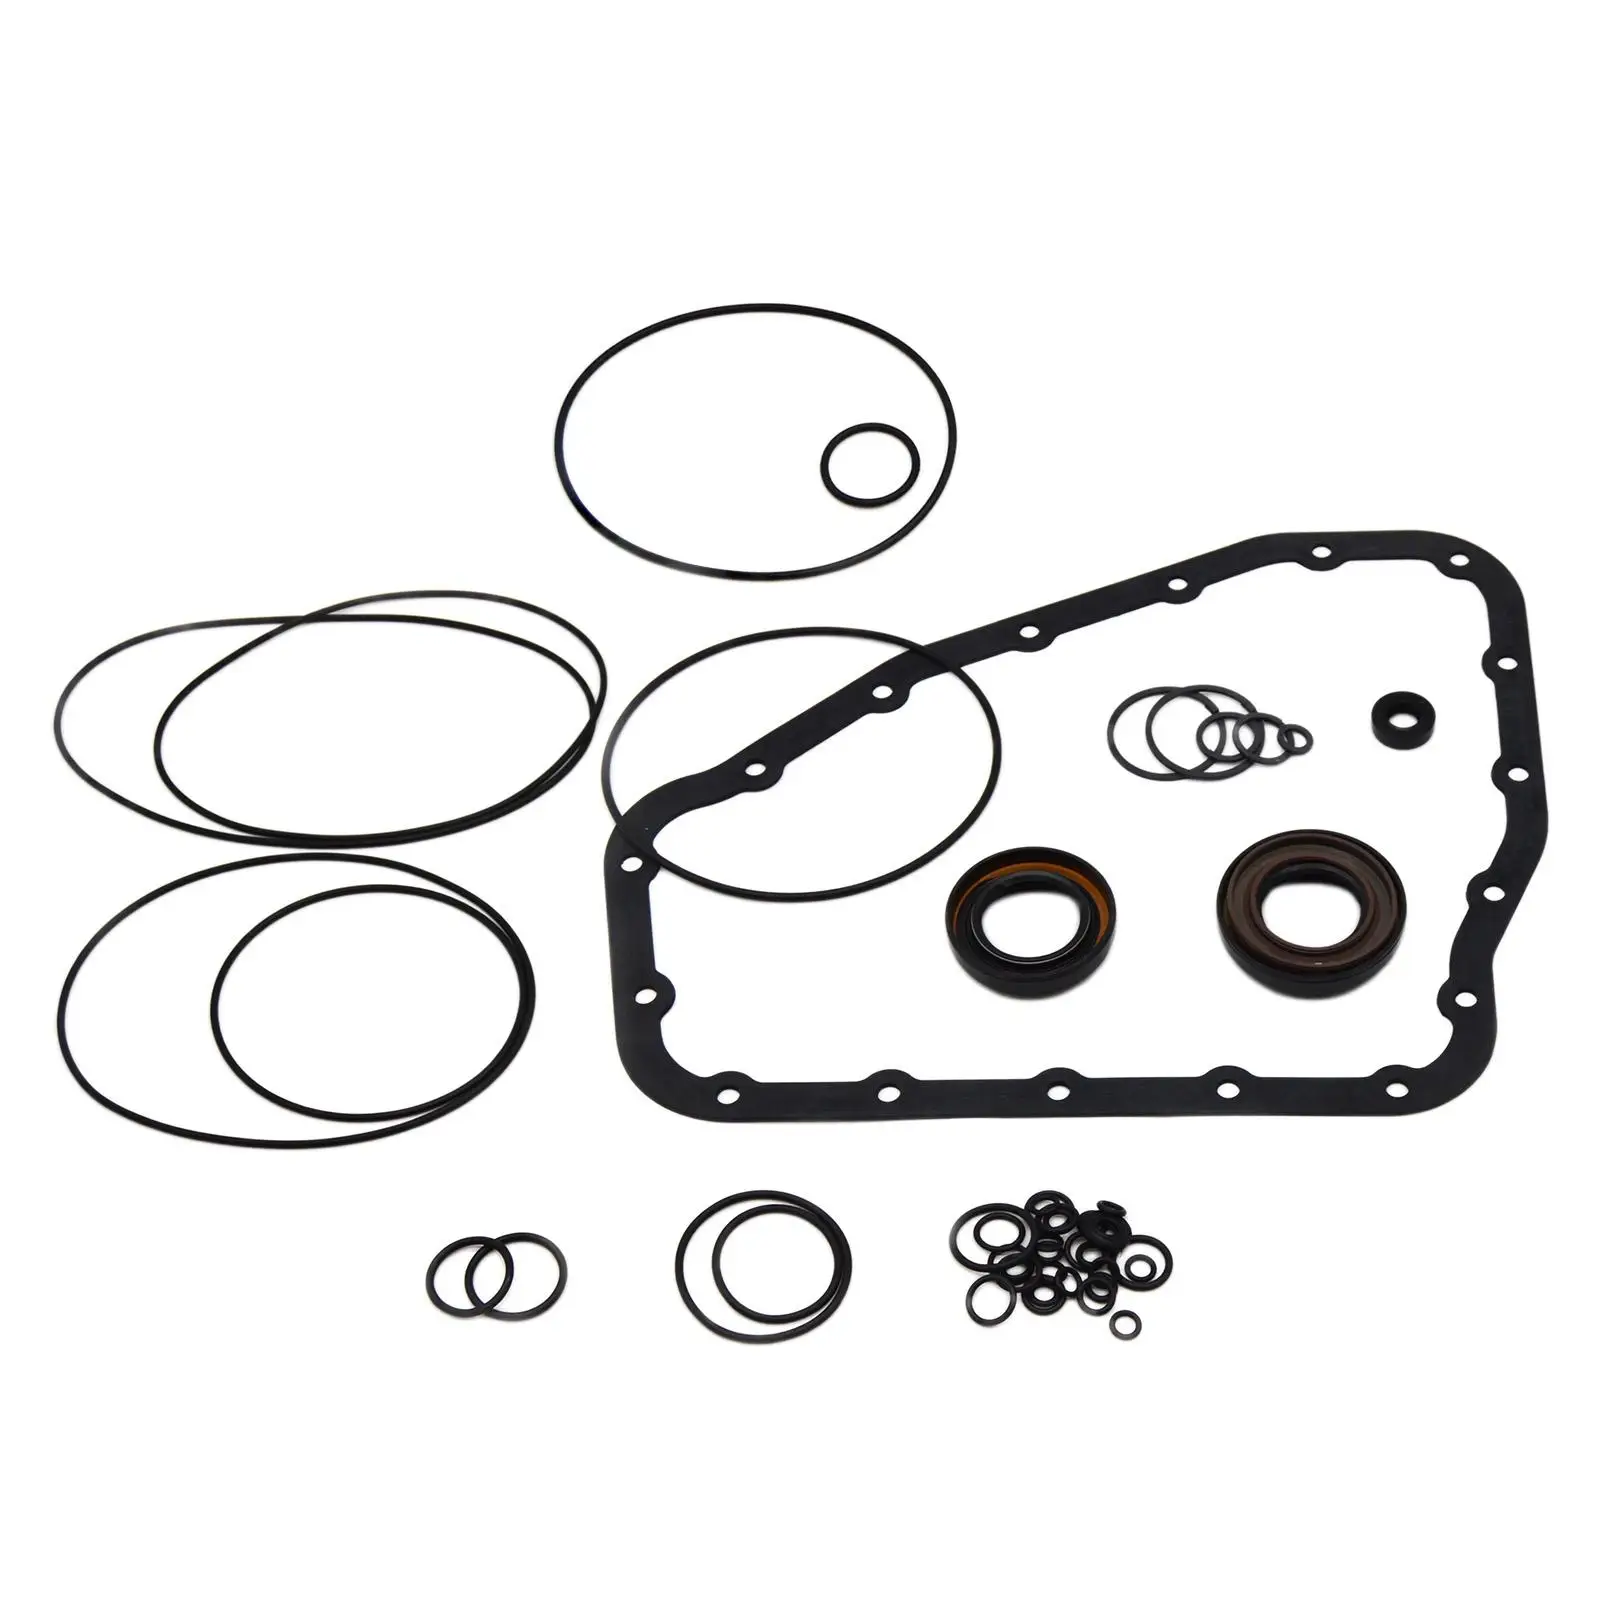 Automotive Transmission  Kit Seals Gaskets U441  Install Professional Replacement